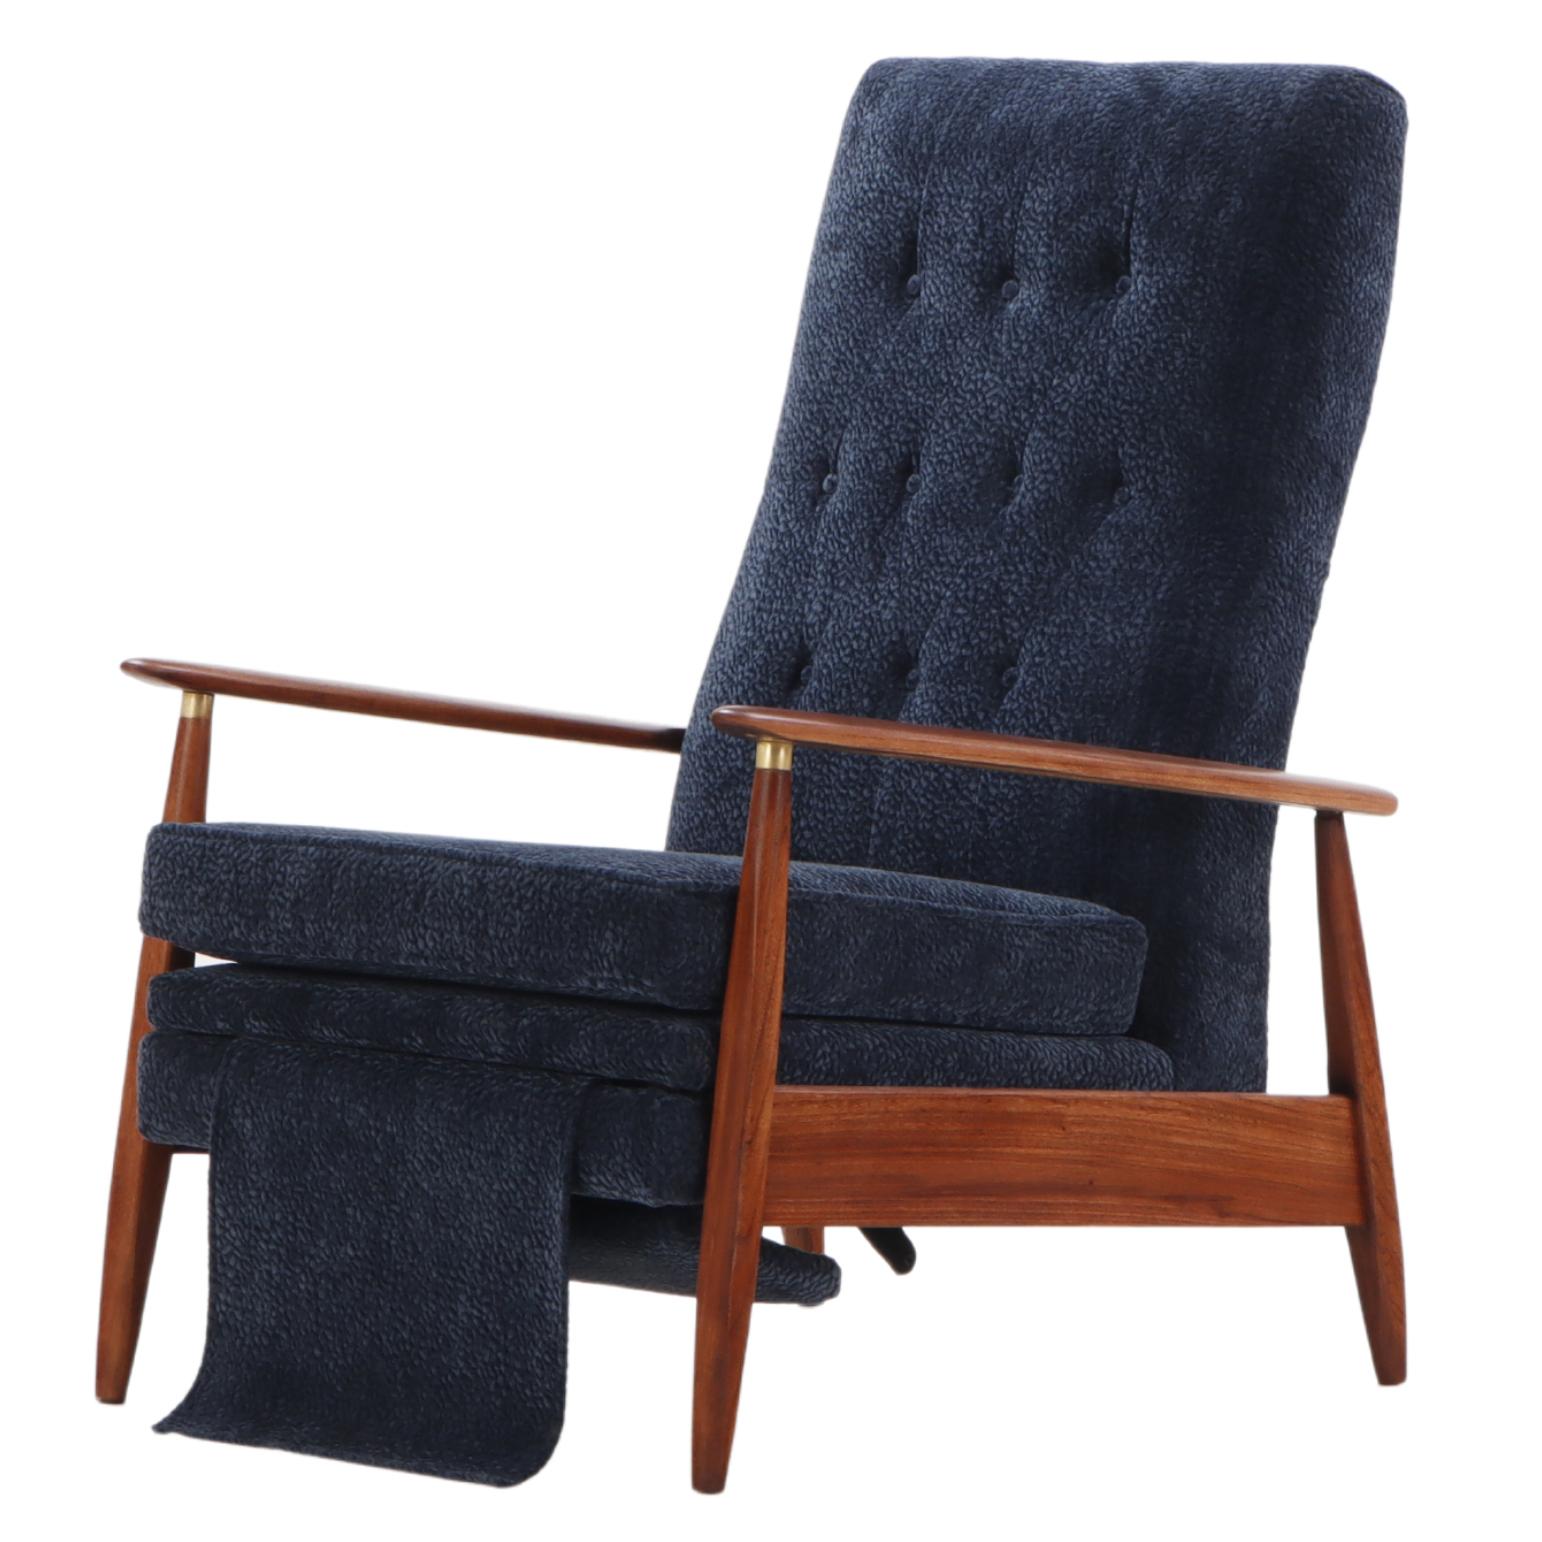 A mid century modern upholstered Milo Baughman model #74 walnut reclining chair. For Sale